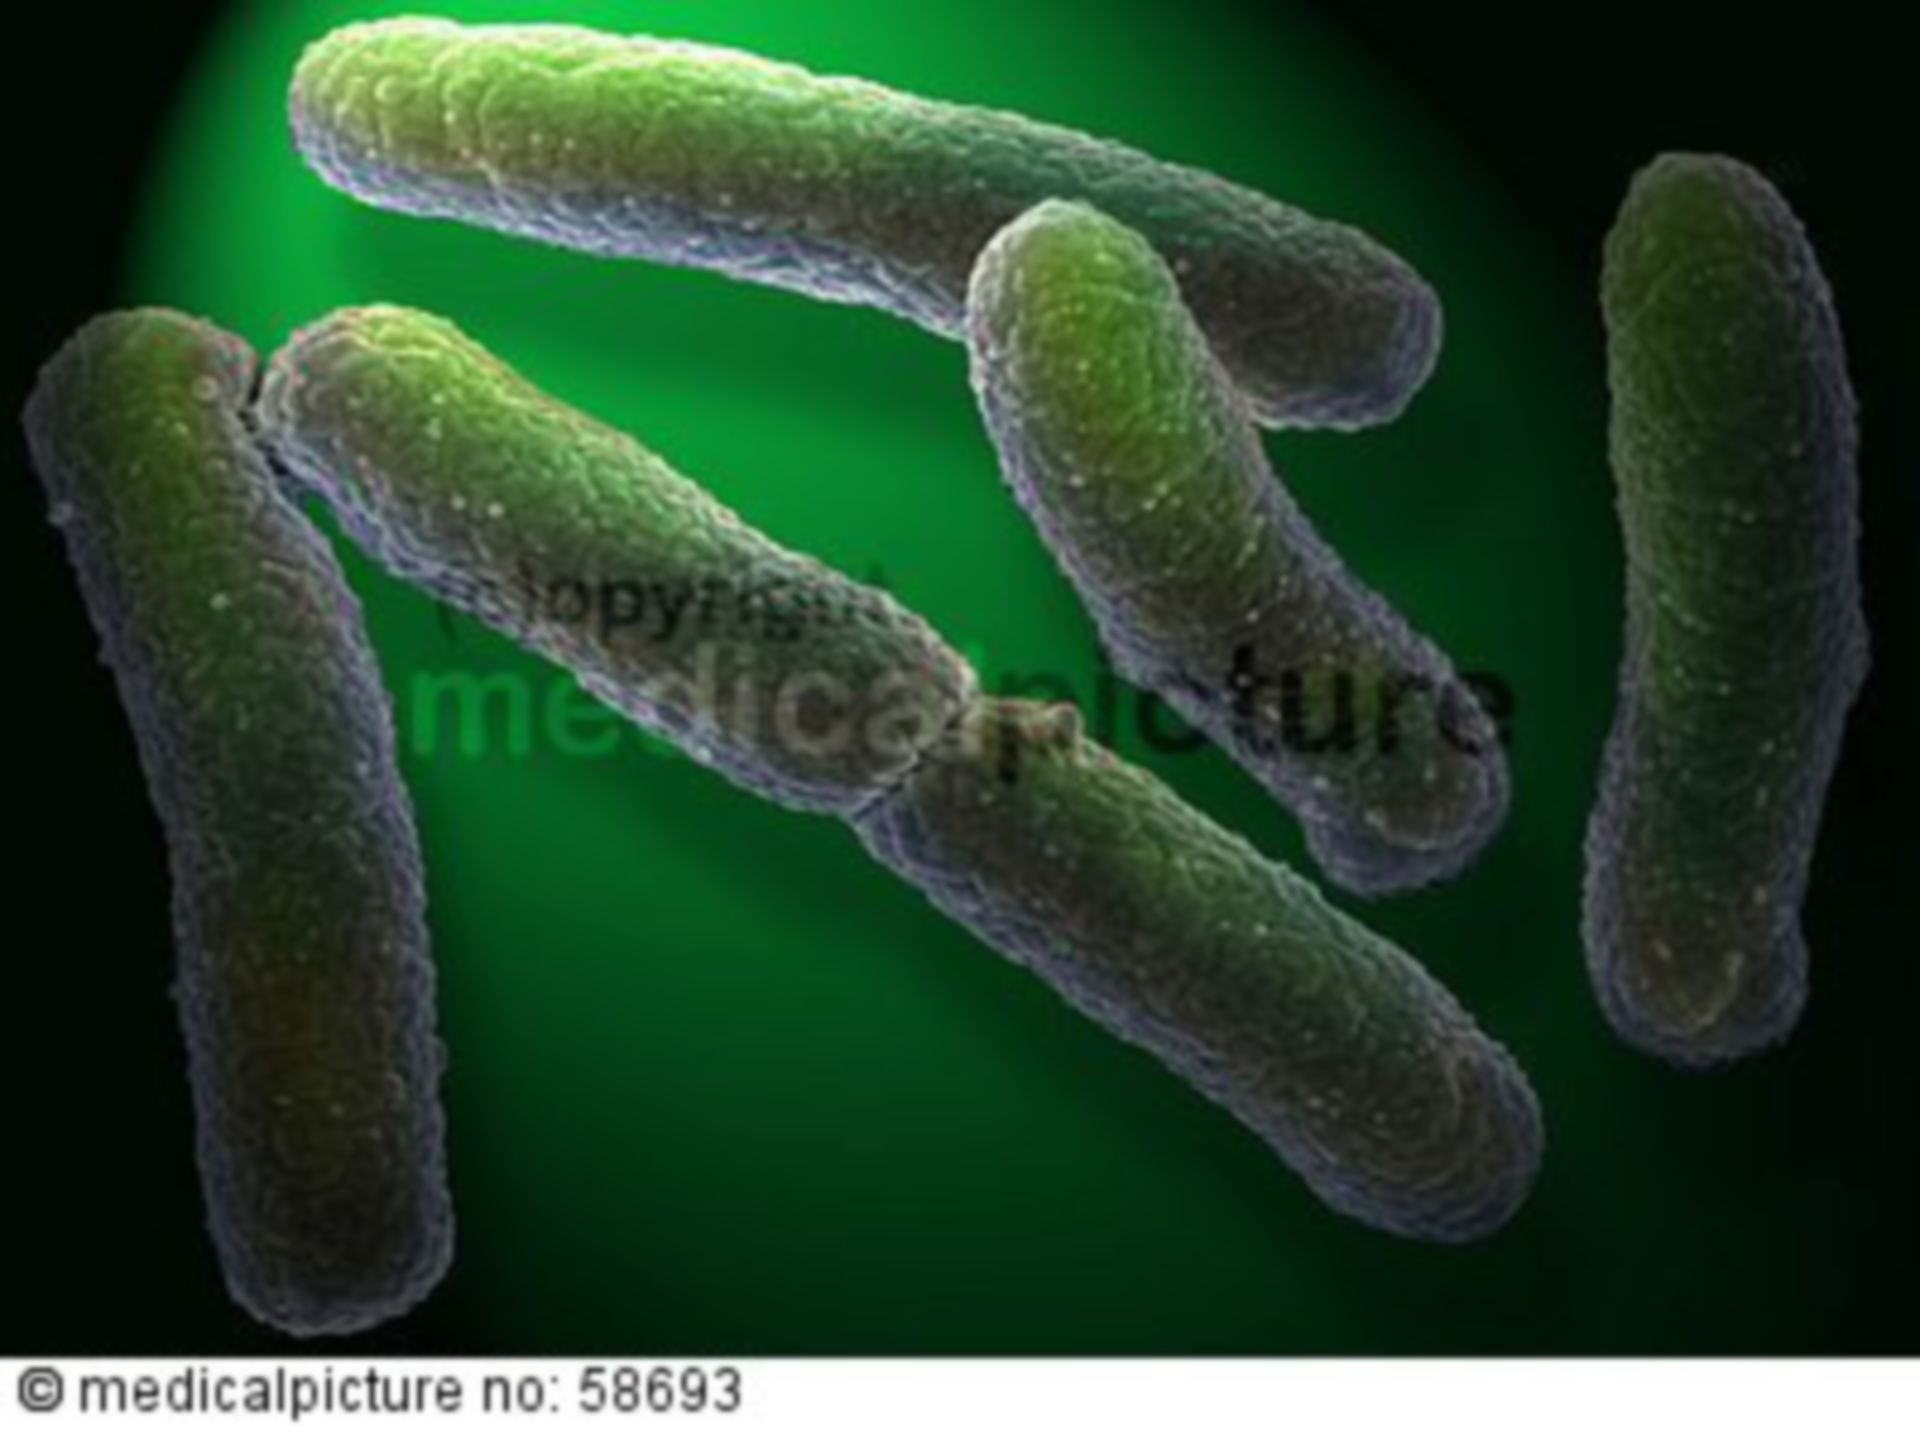 NDM 1-Bakterium